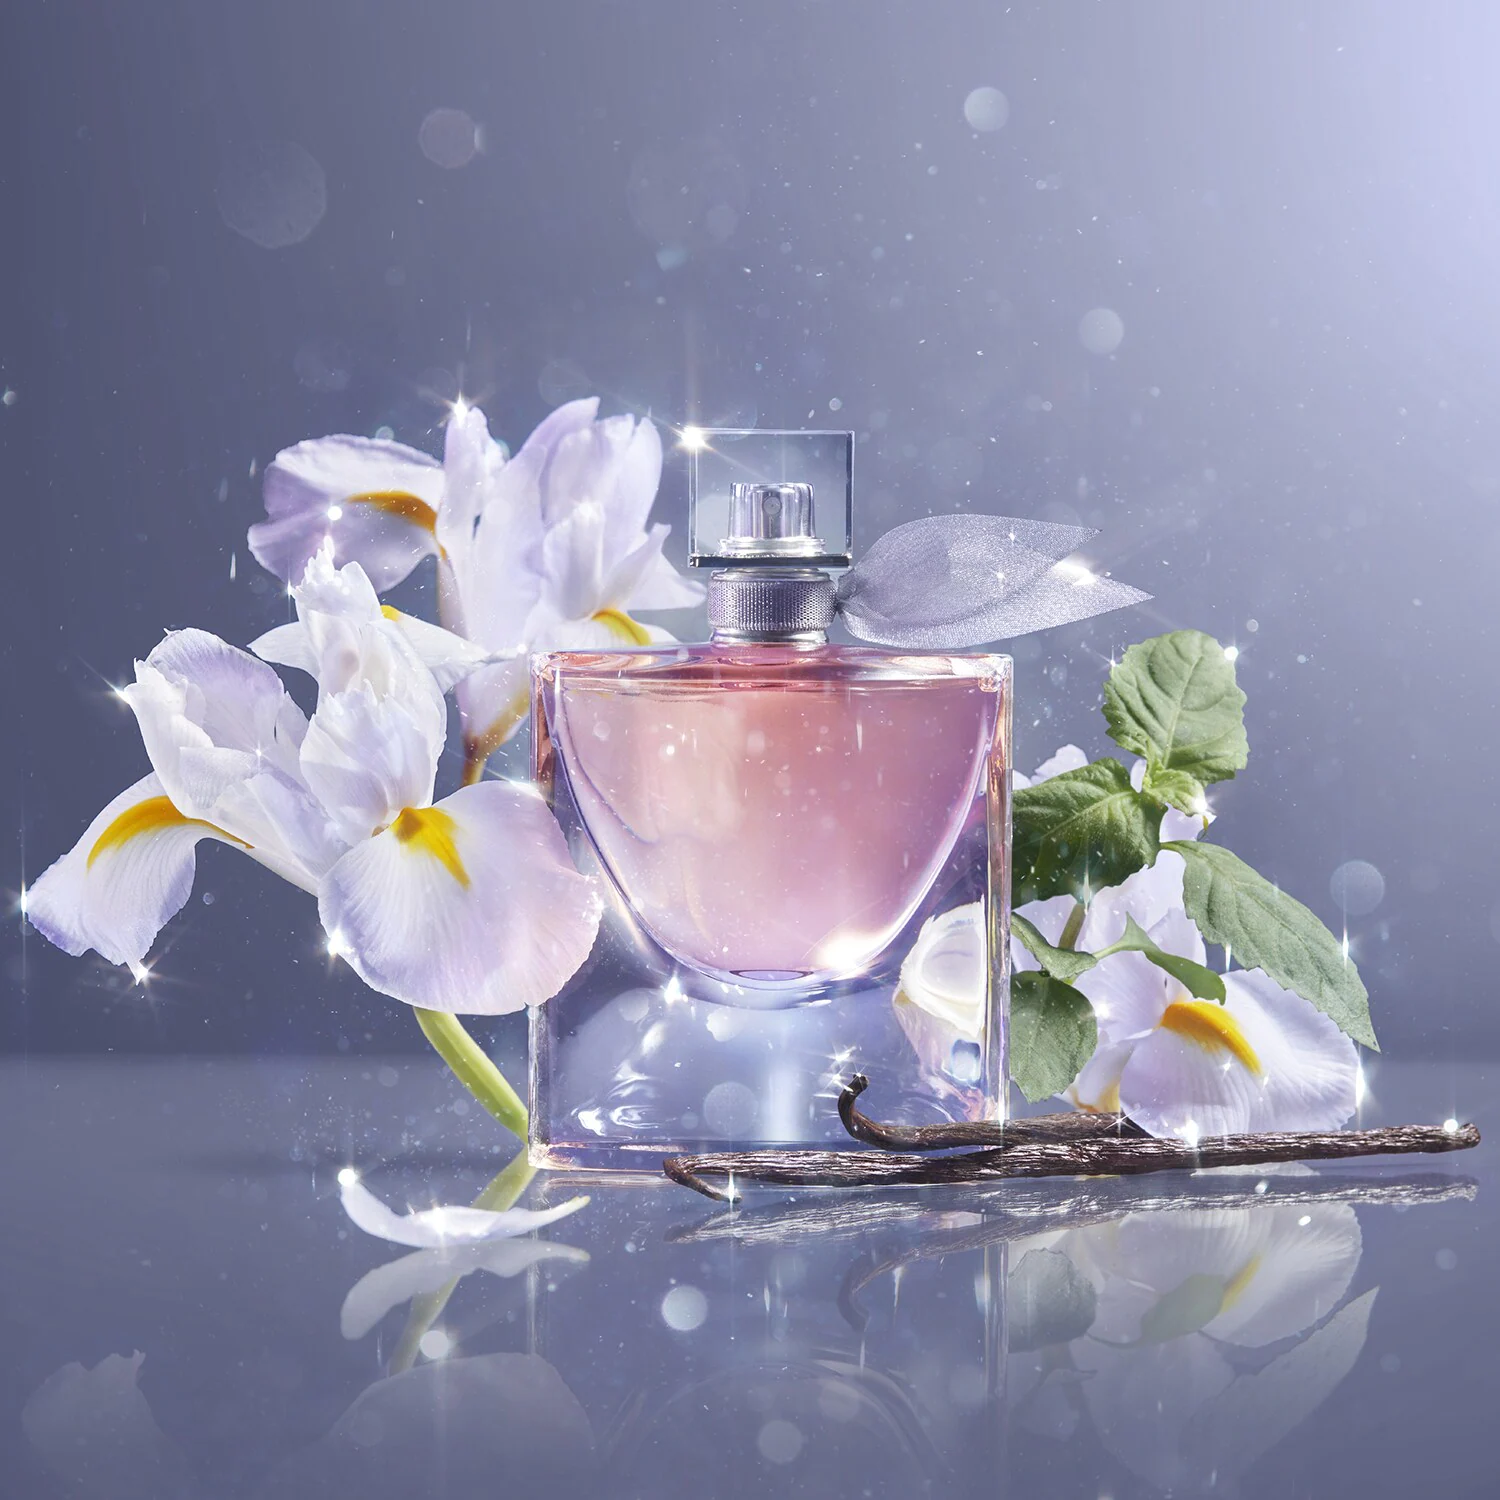 Parfum original La Vie Est Belle [1]